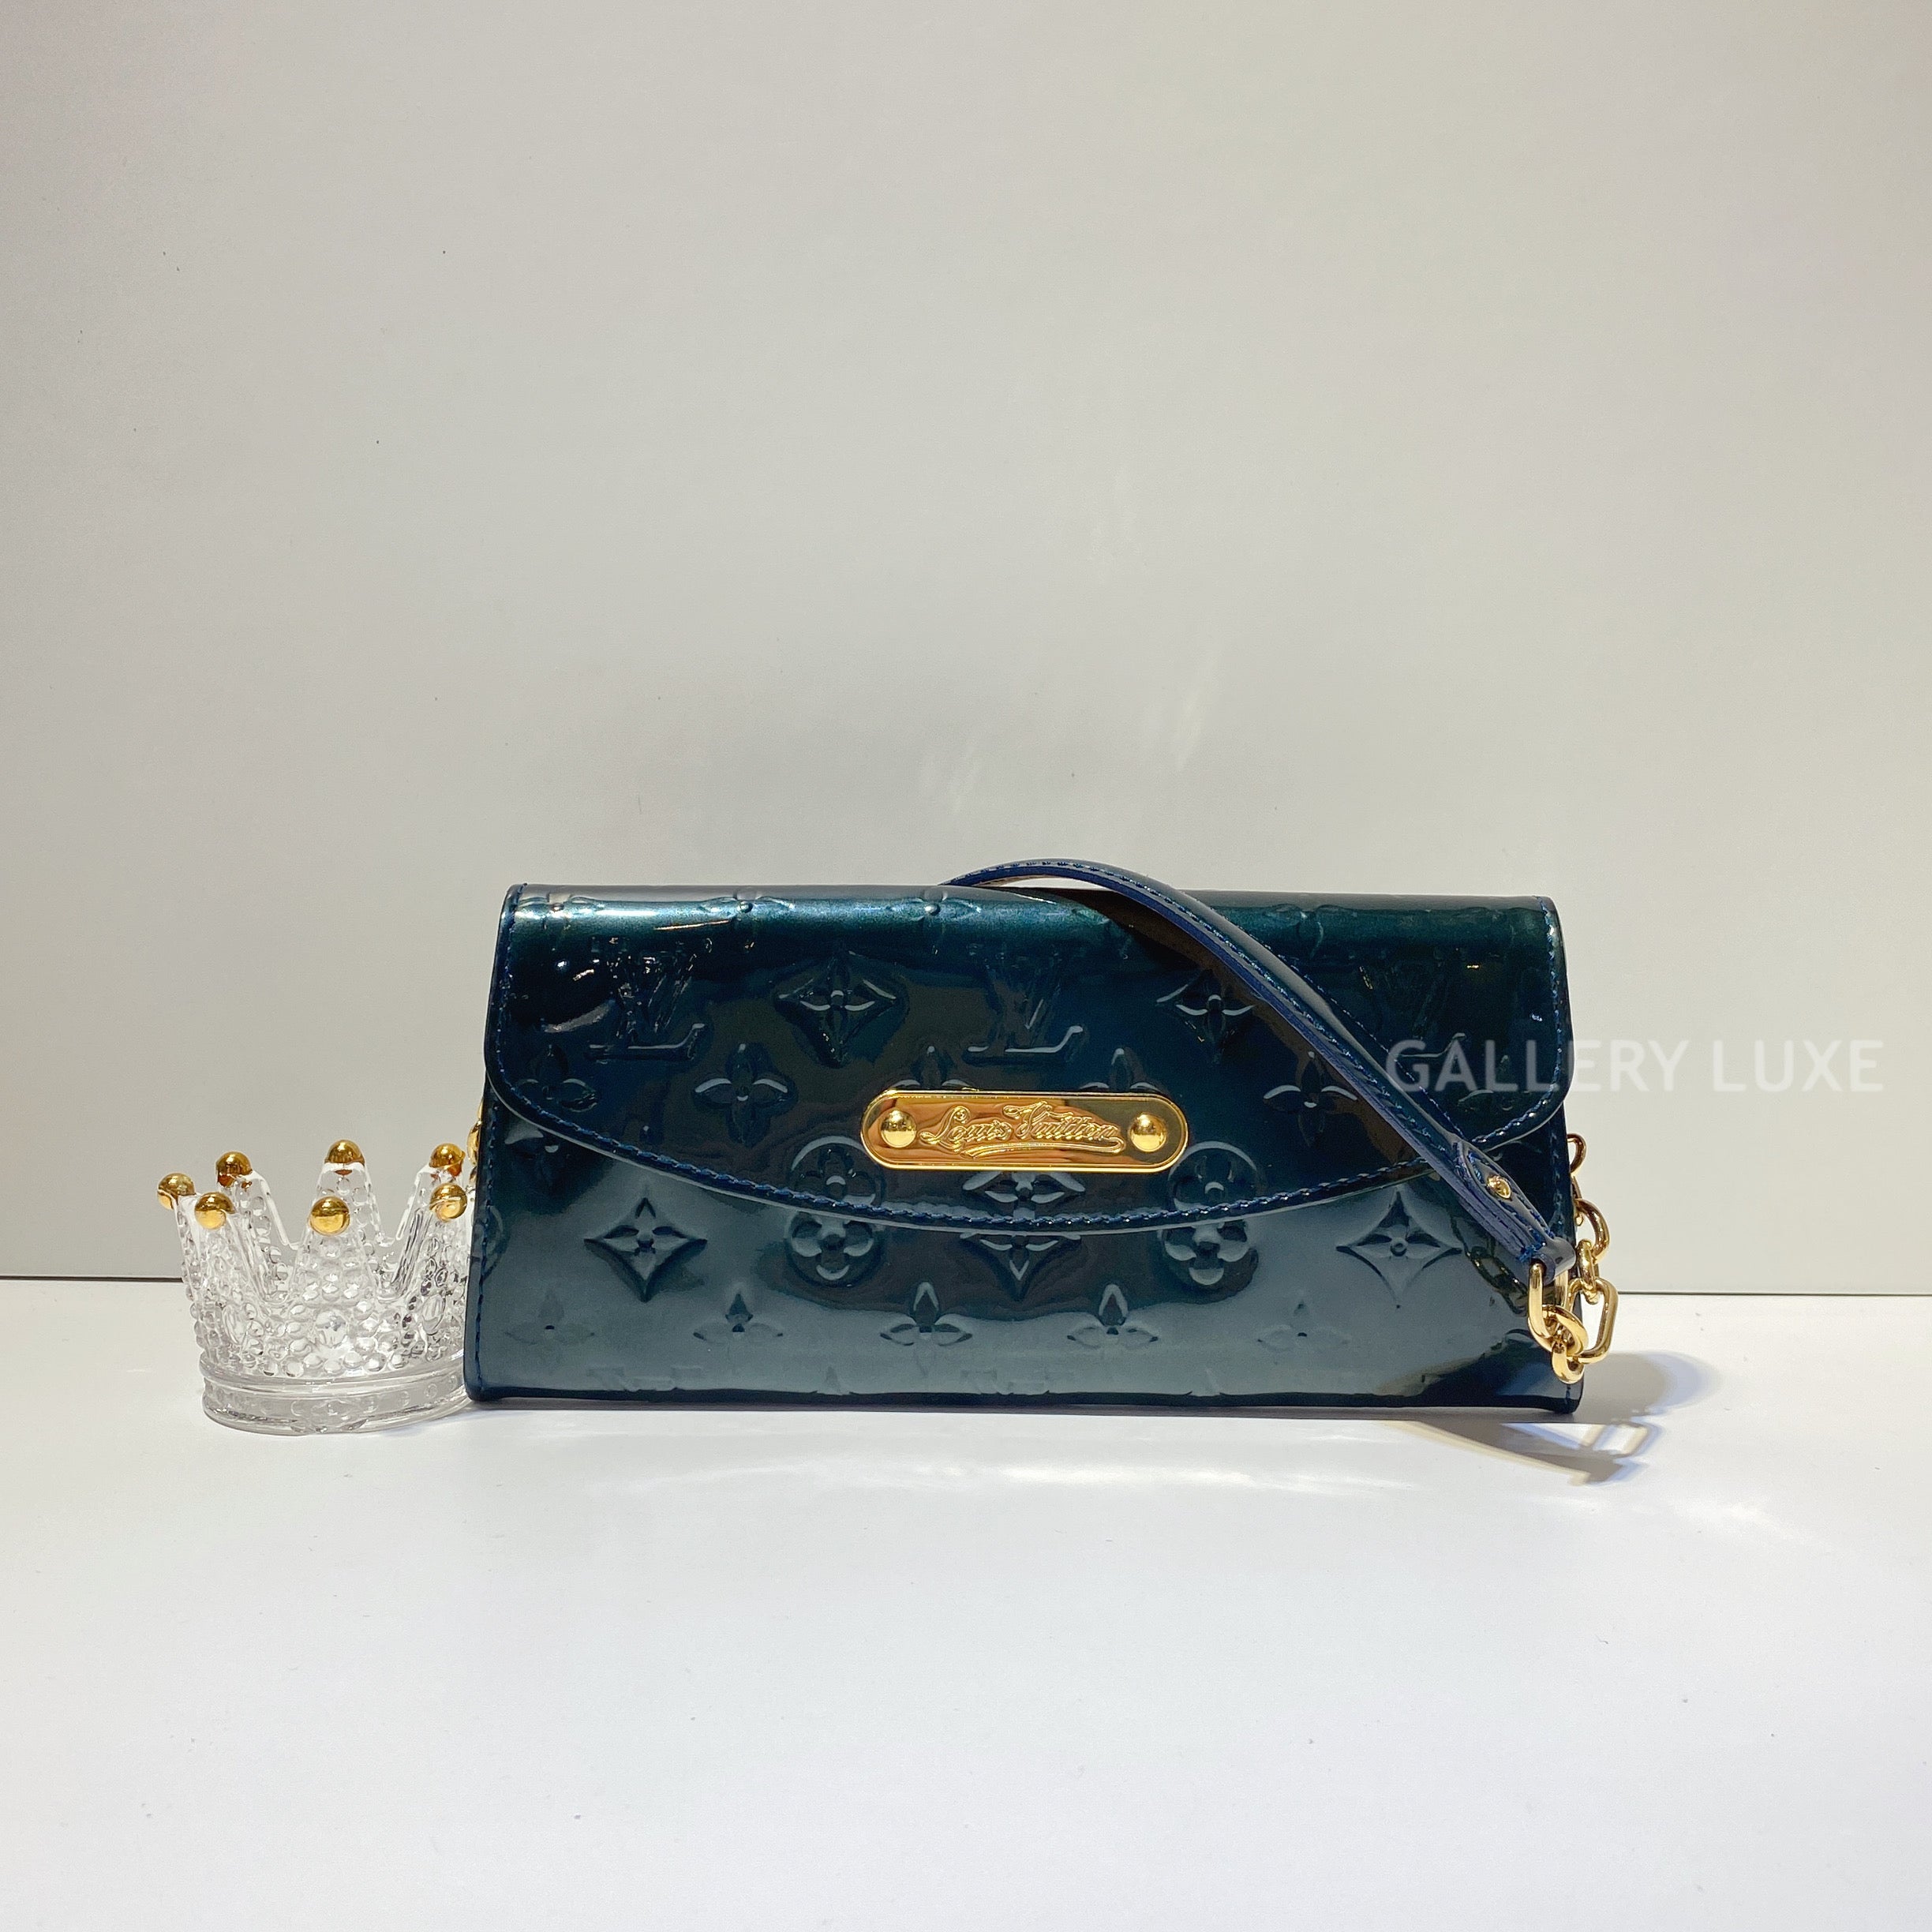 Louis Vuitton - Cannes bag - Monogram Vernis - Black - GHW